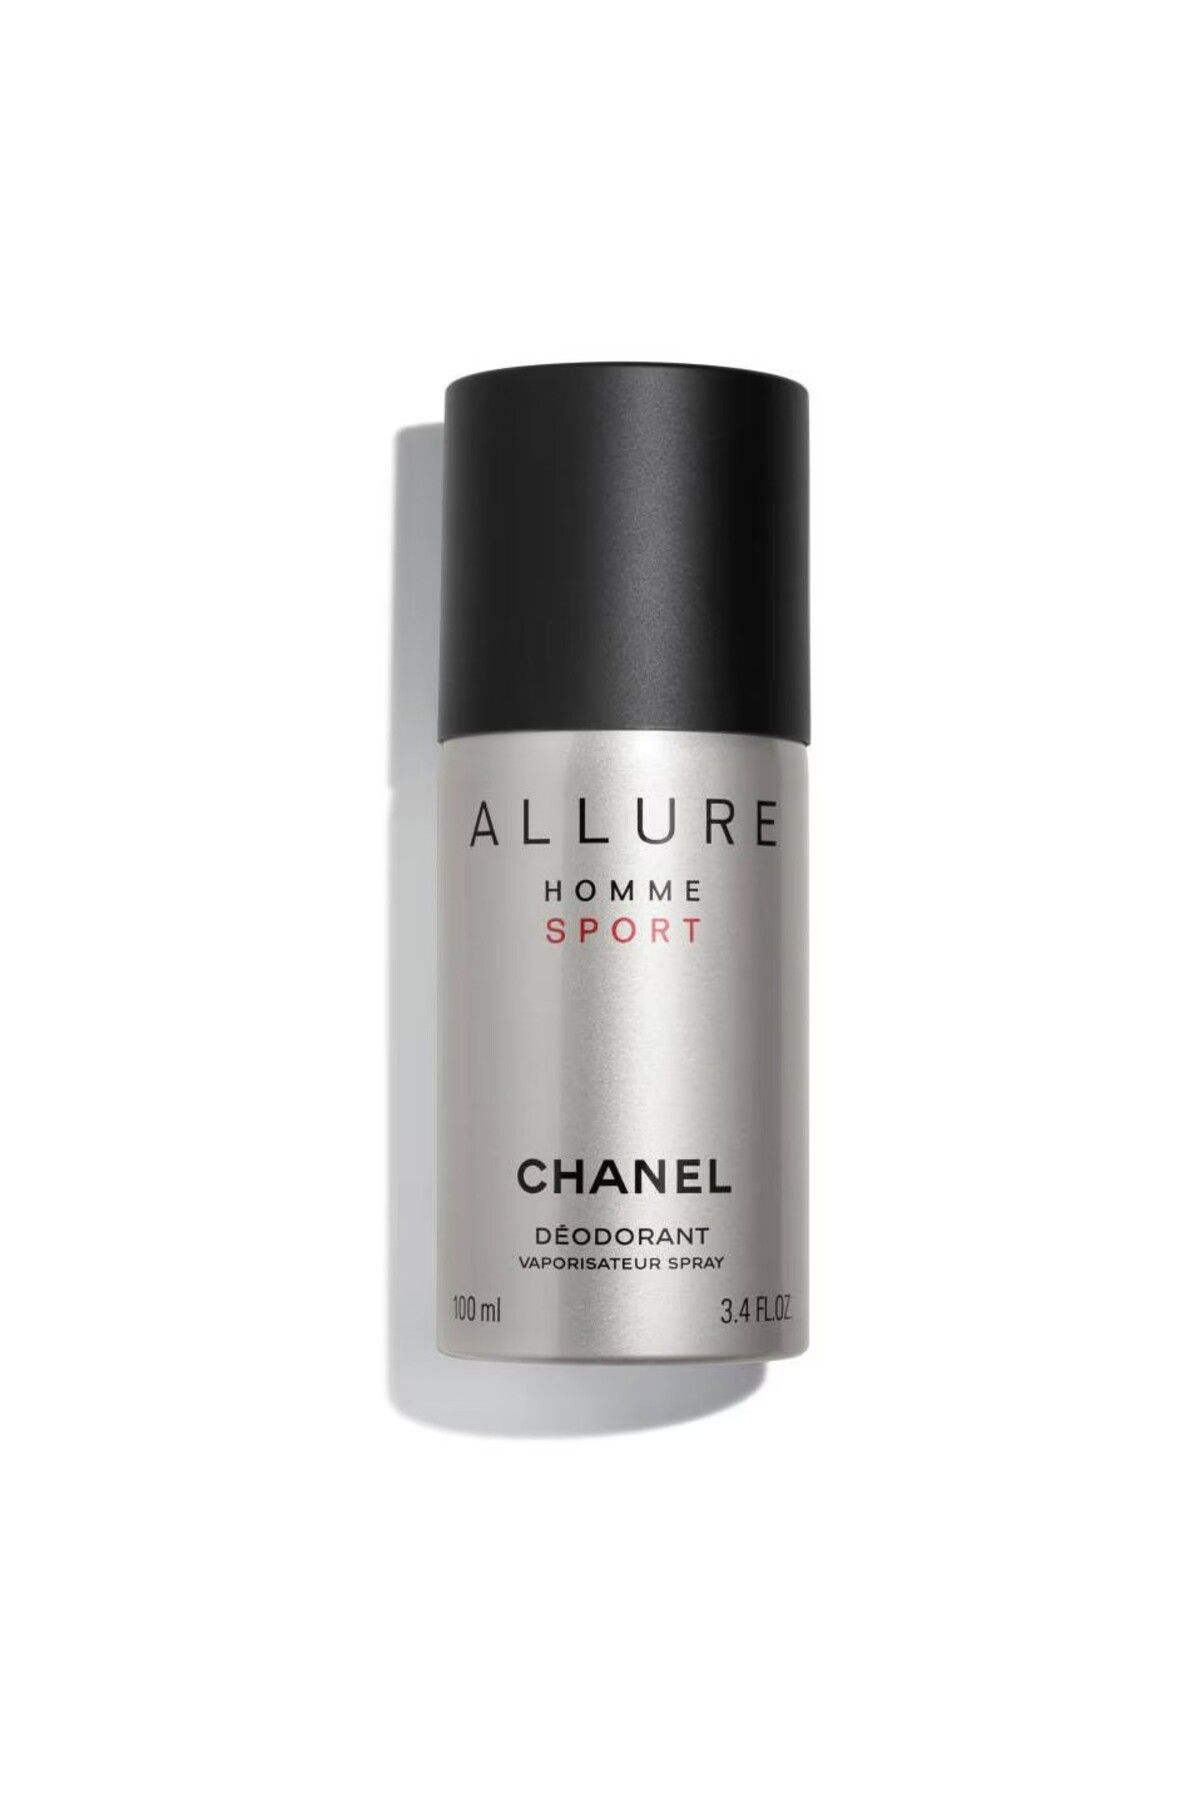 Chanel ALLURE HOMME SPORT - Erkekler İçin Ferah Ve İz Bırakan Notalar İçeren Deodorant 100 ml